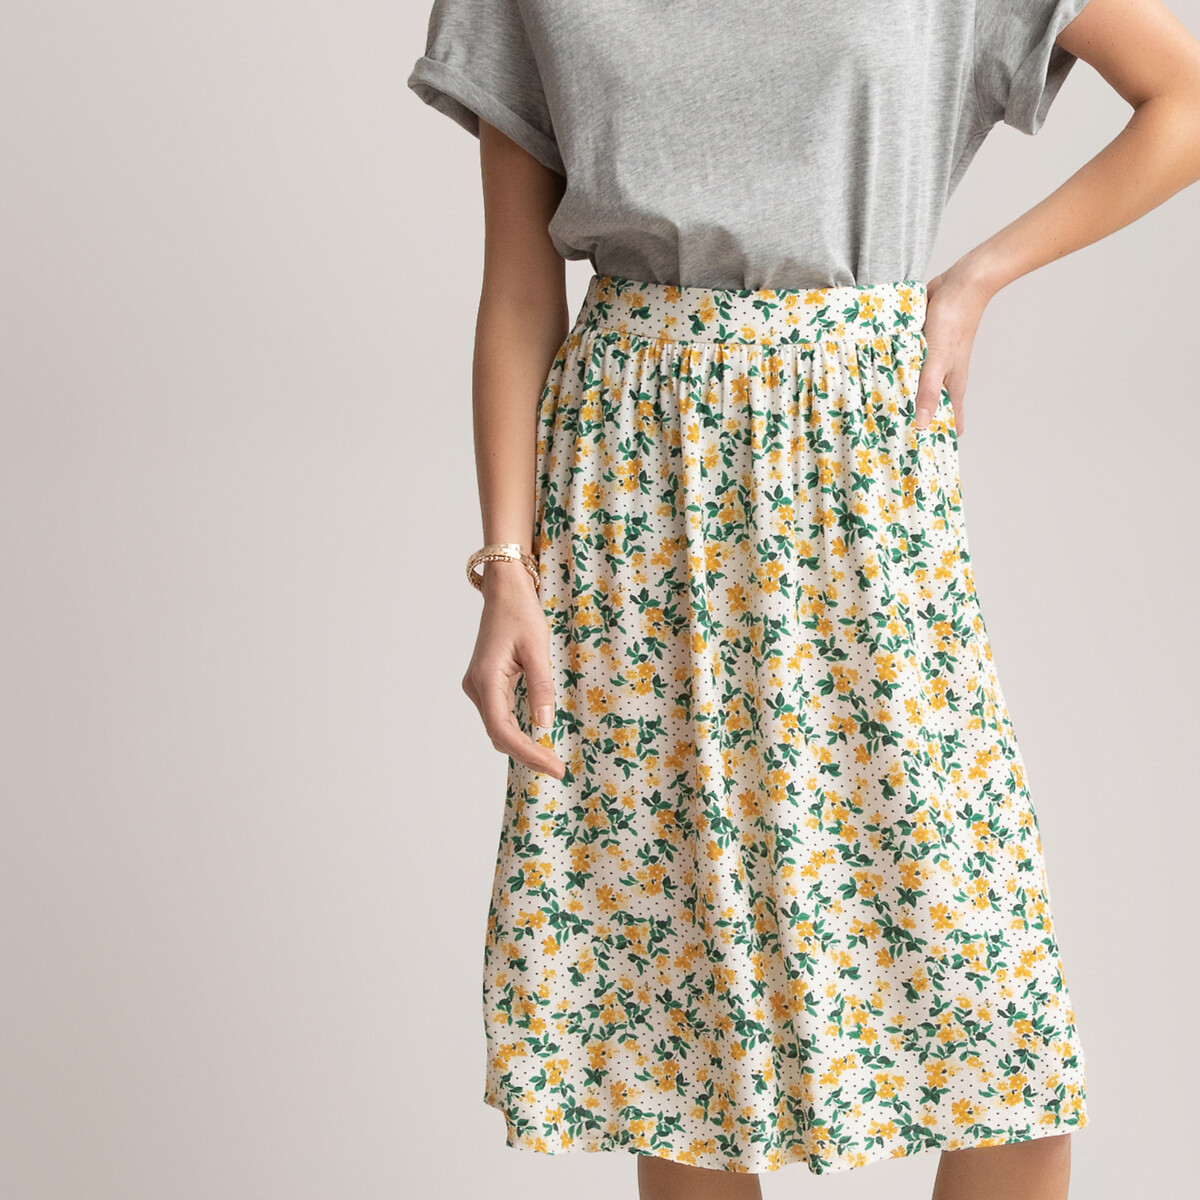 Knee-Length Skirt in Floral Print